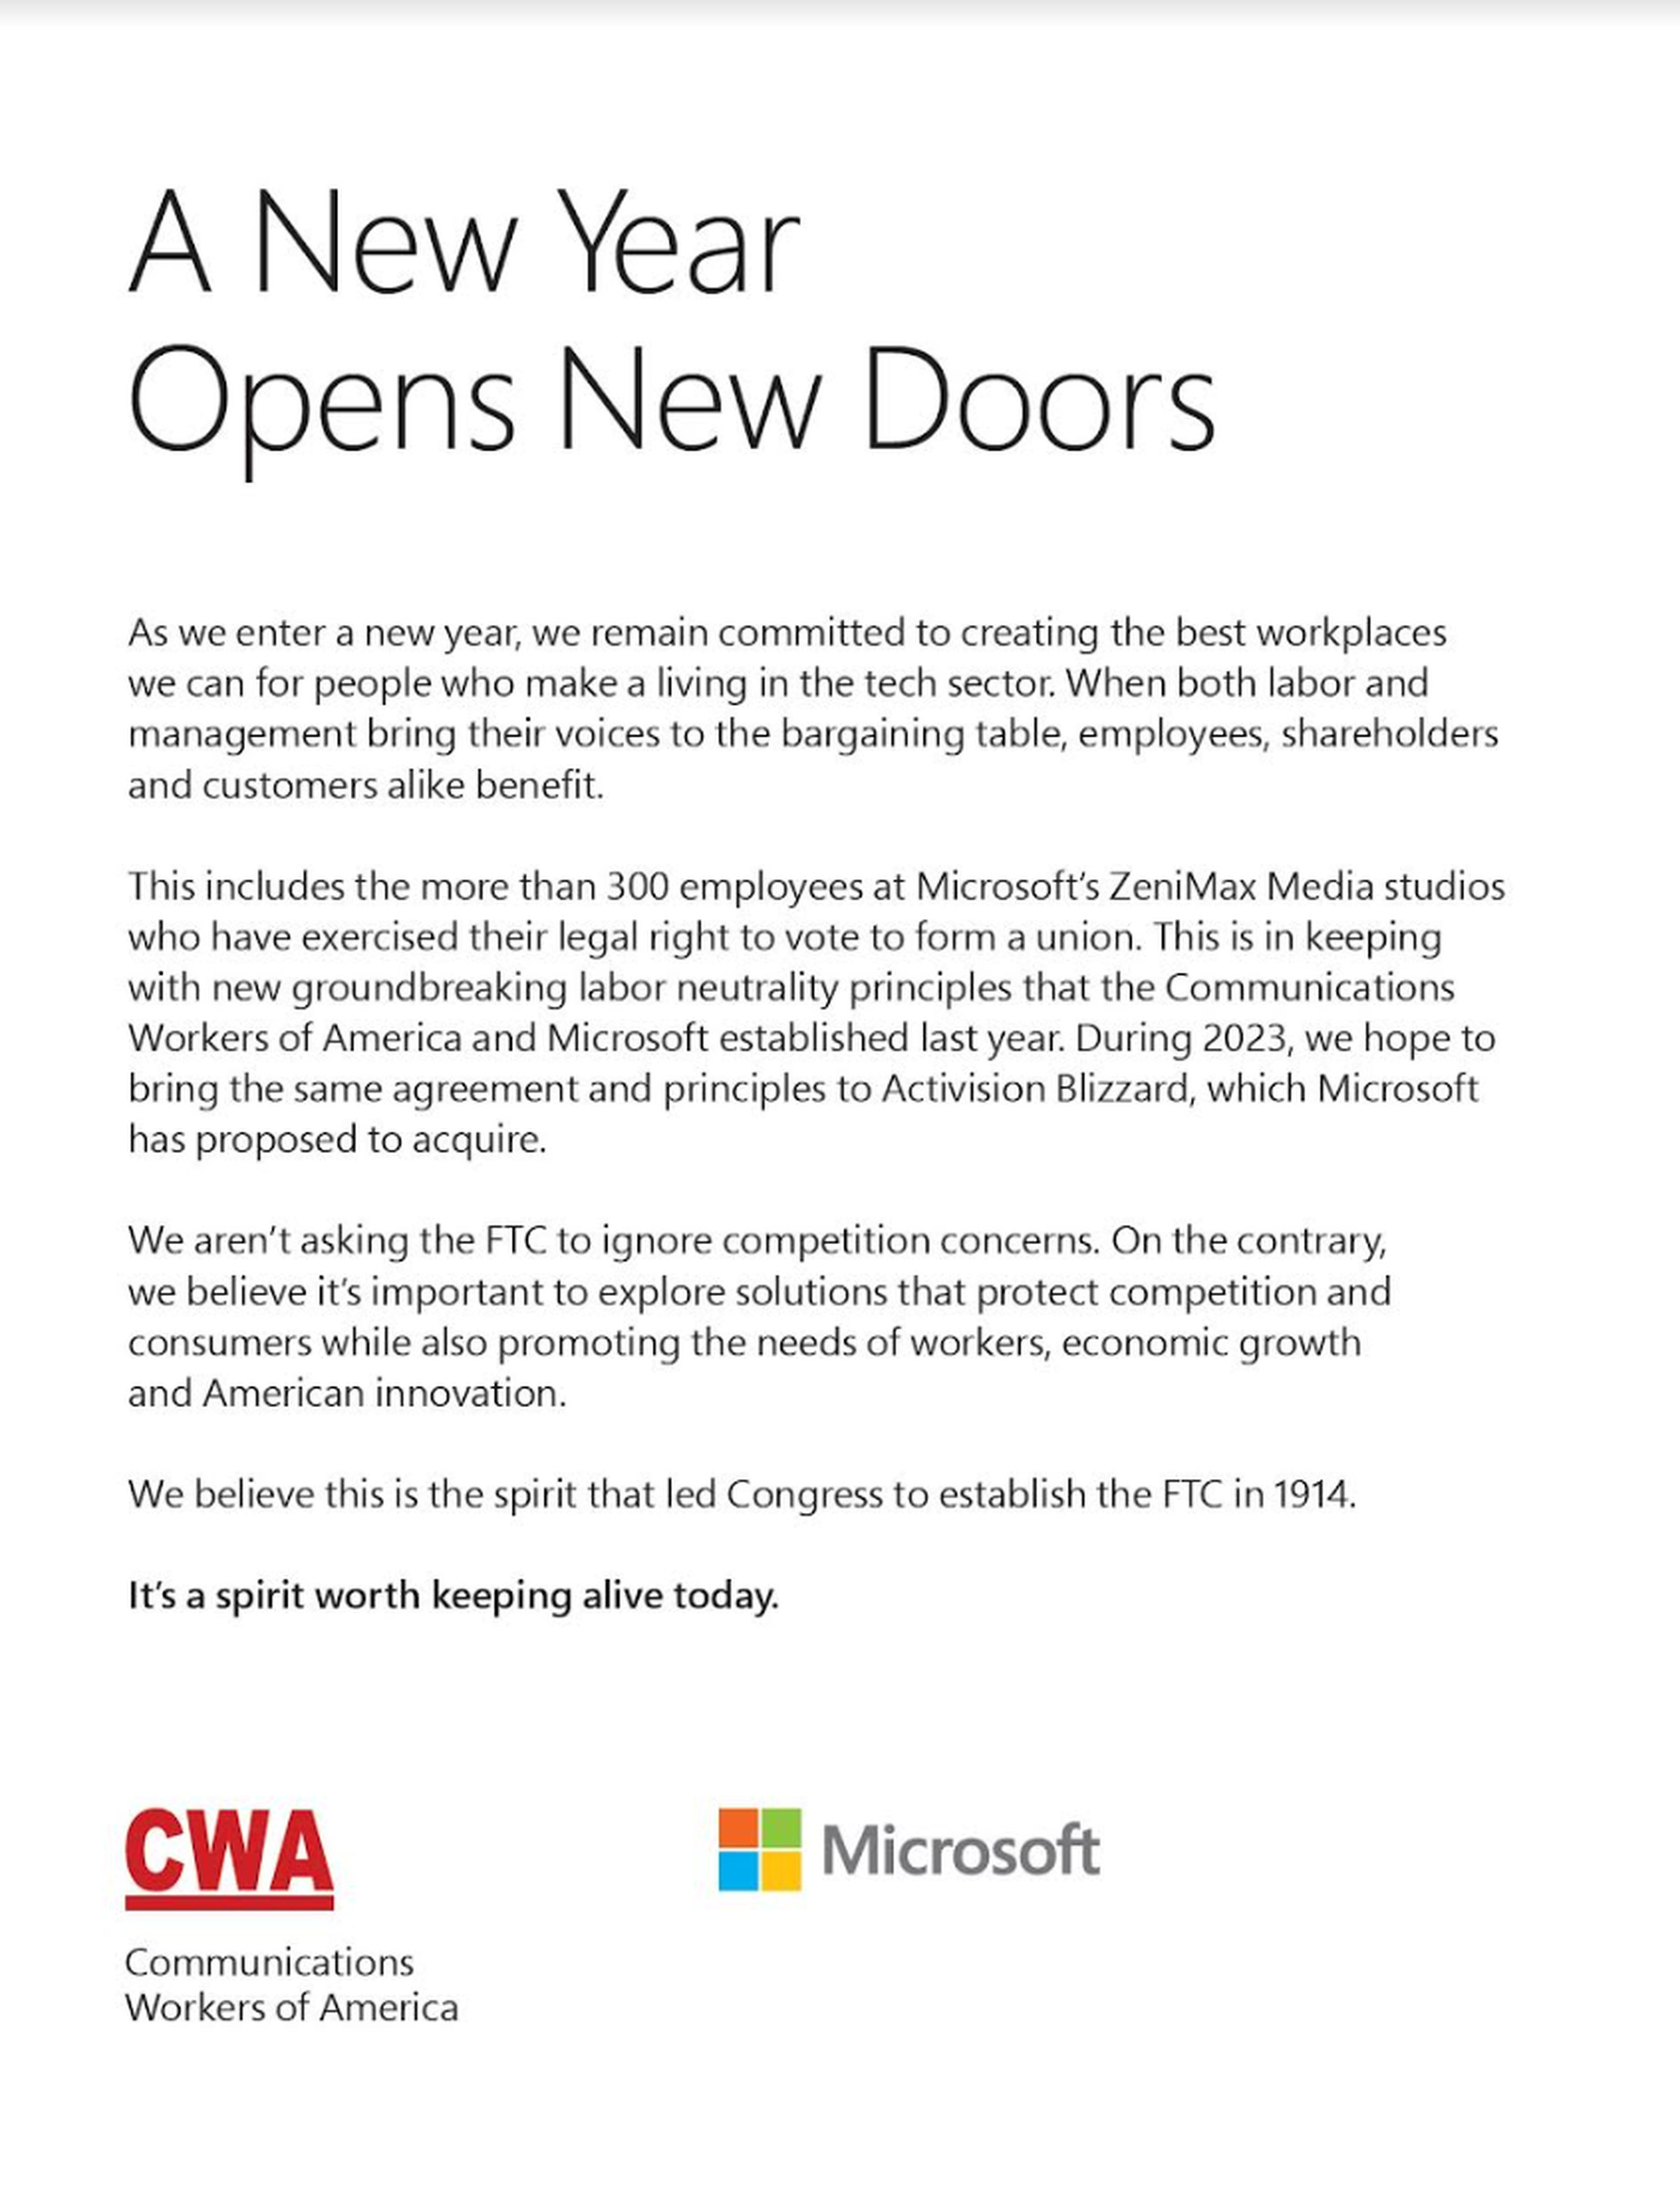 Microsoft and the CWA’s ad in The Washington Post.